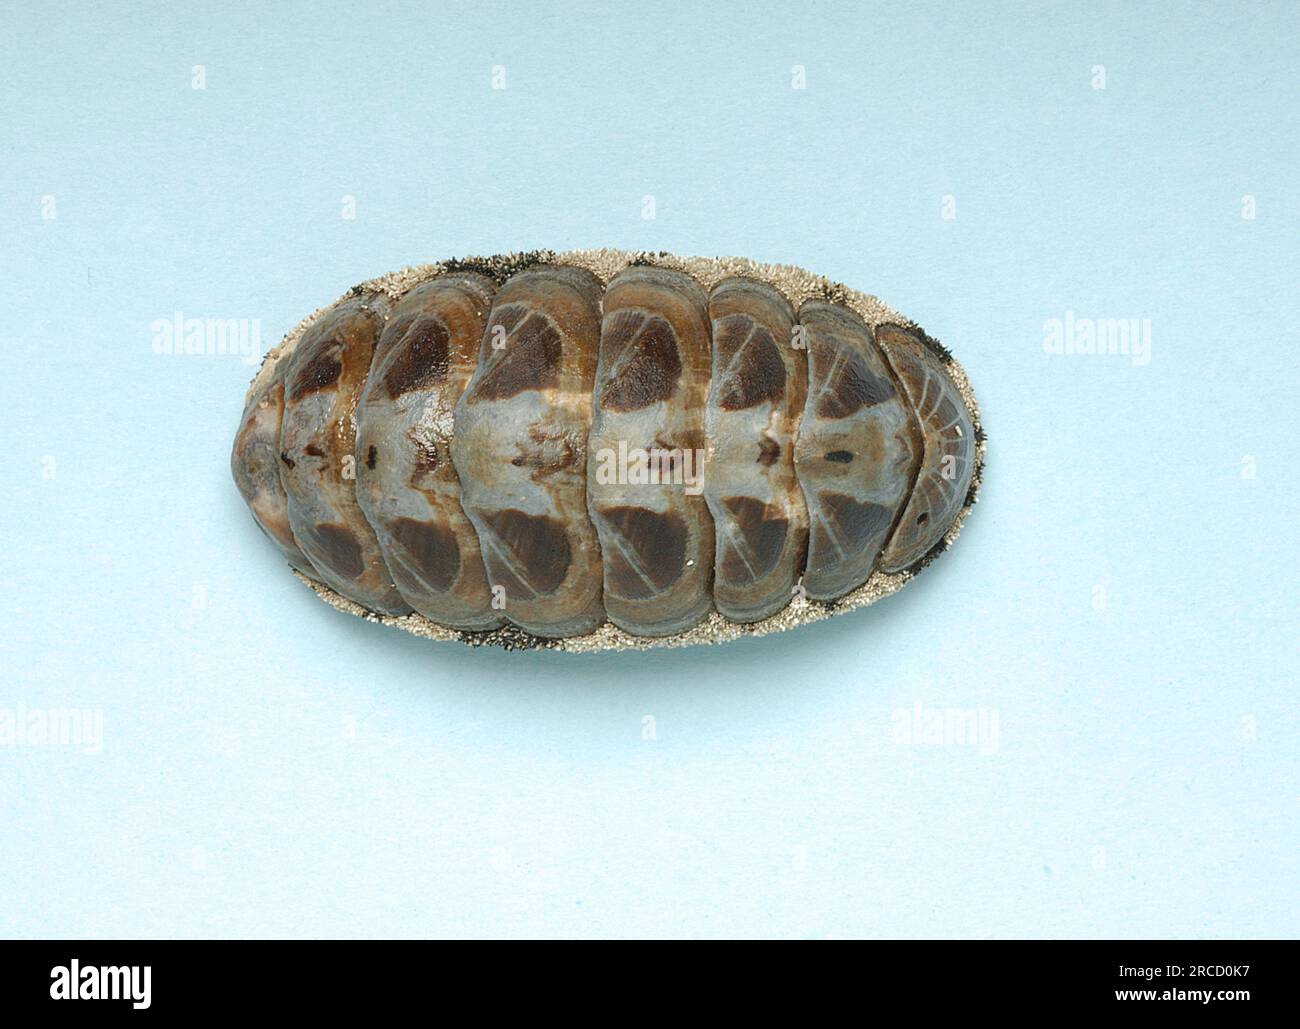 Acanthopleura vaillantii, Chitonidae Stock Photo